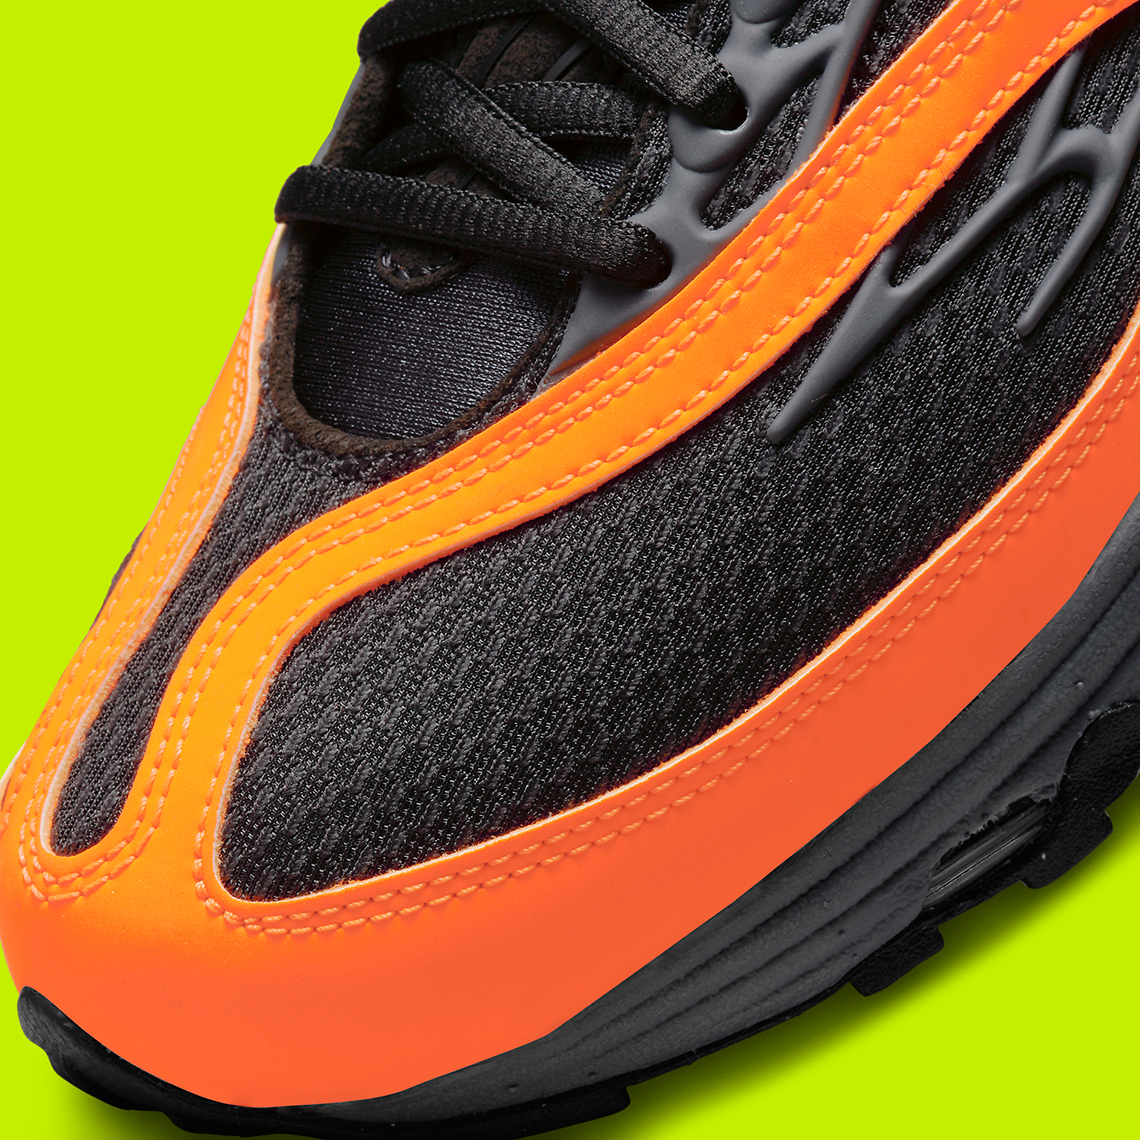 Nike Air Tuned Max Volt Orange Grey DH4793-700 | SneakerNews.com